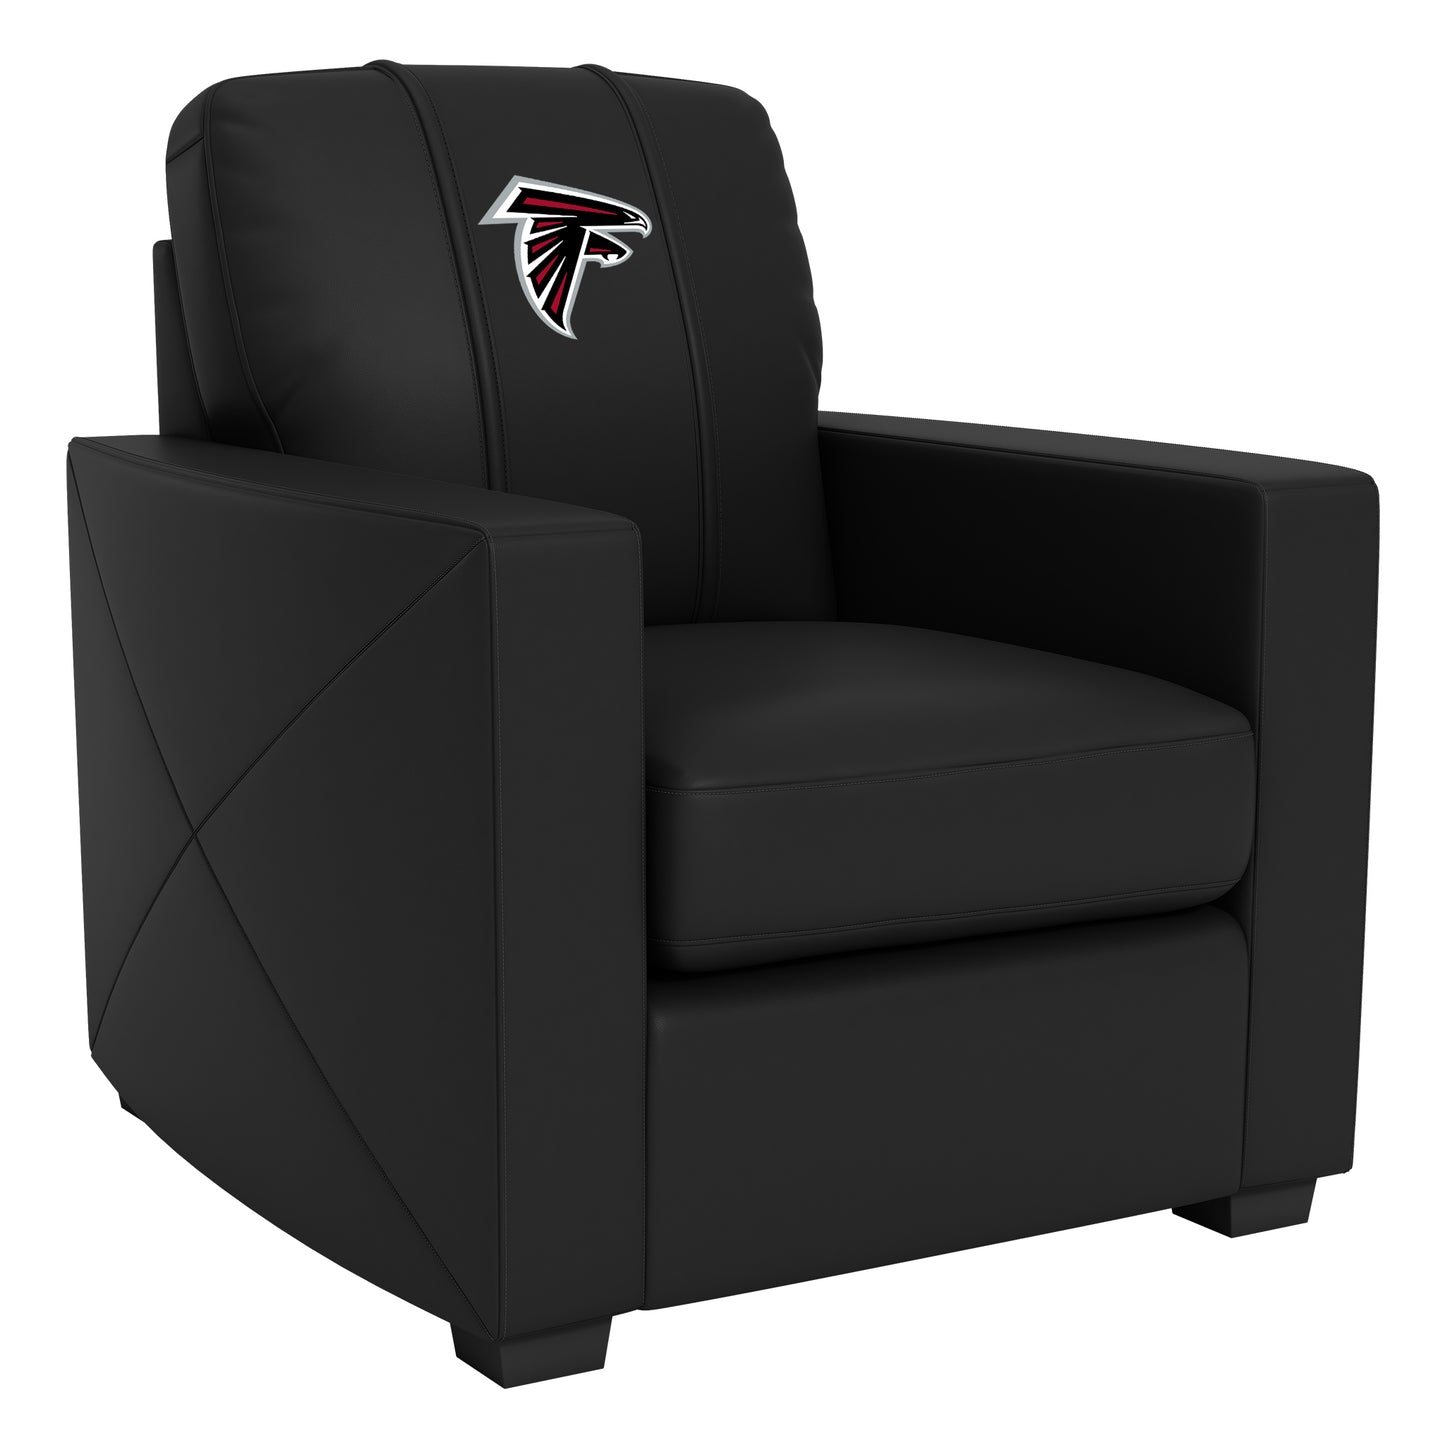 Silver Club Chair with Atlanta Falcons Primary Logo